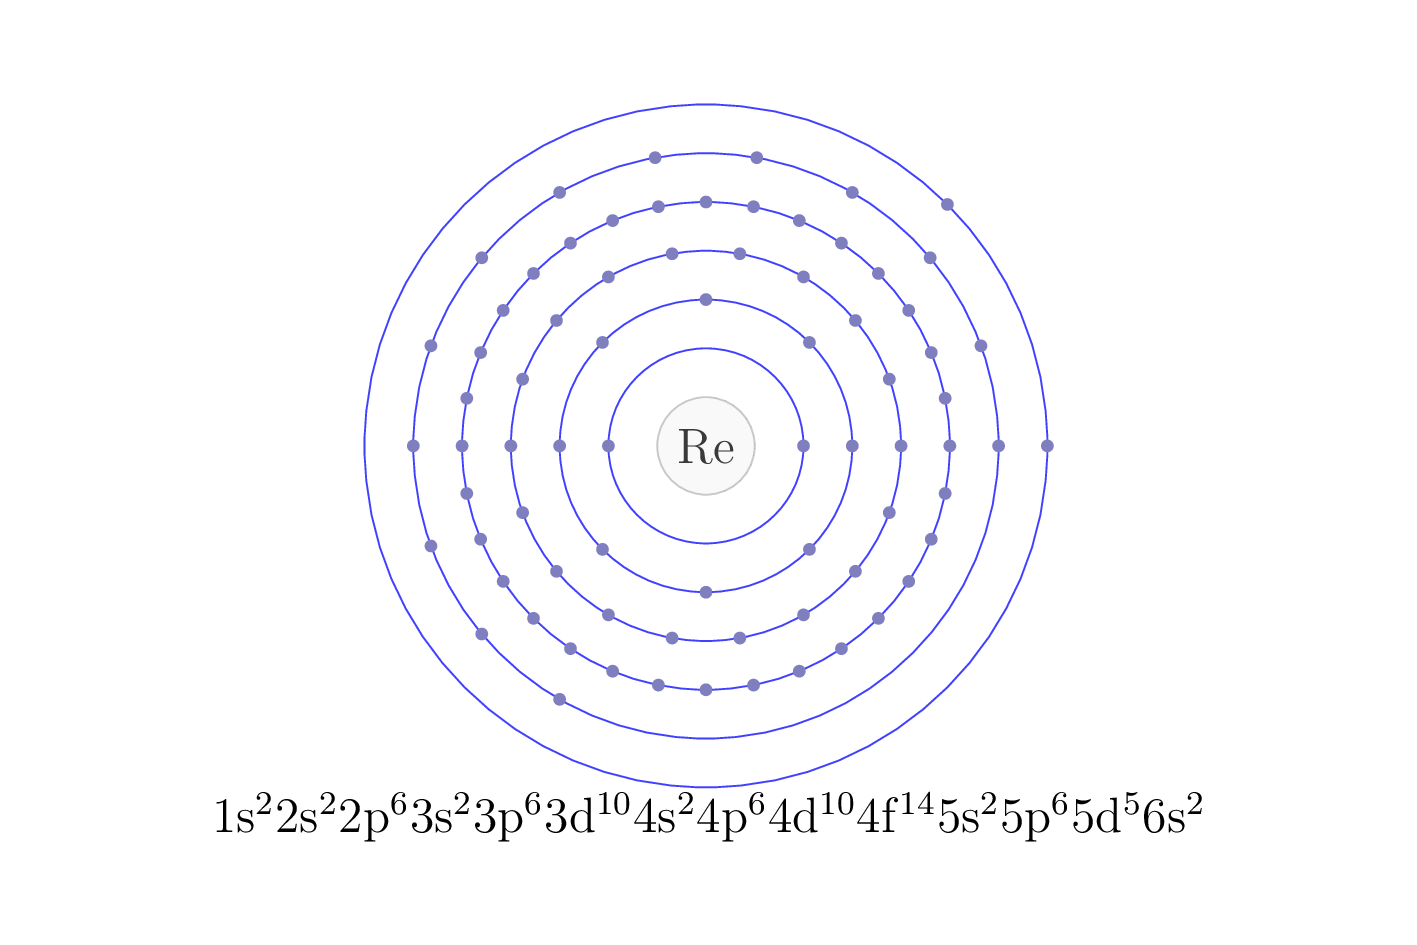 electron configuration of element Re